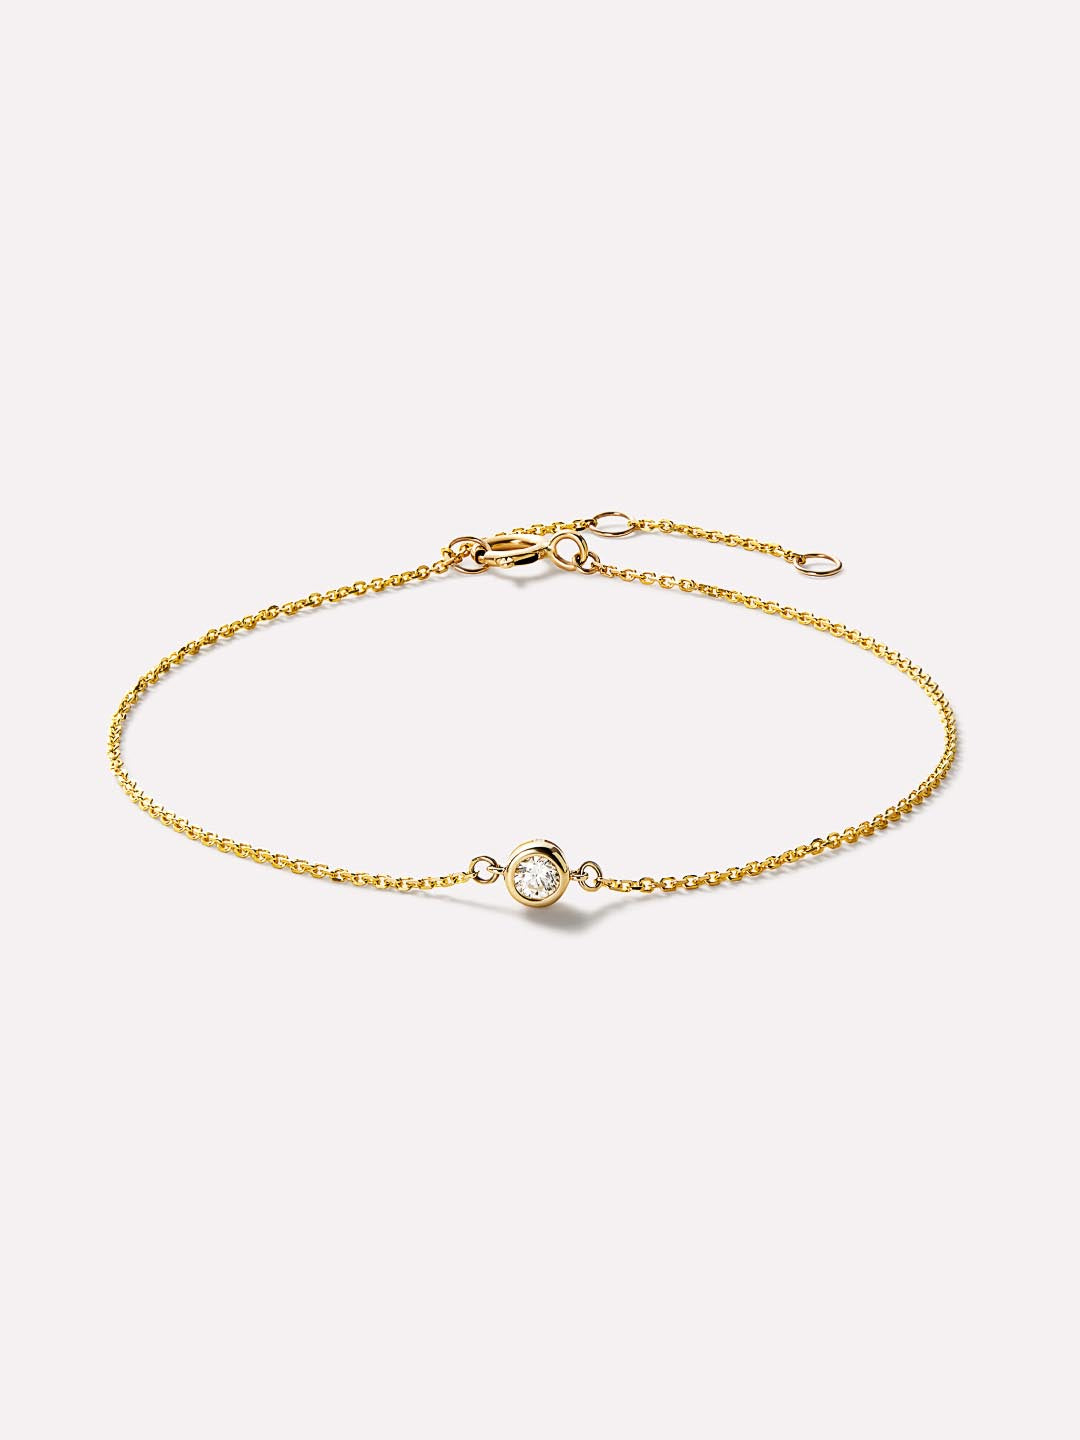 1/20 Ctw Swirl Shape Single Cut Diamond Tennis Bracelet in S | Becker's  Jewelers | Burlington, IA